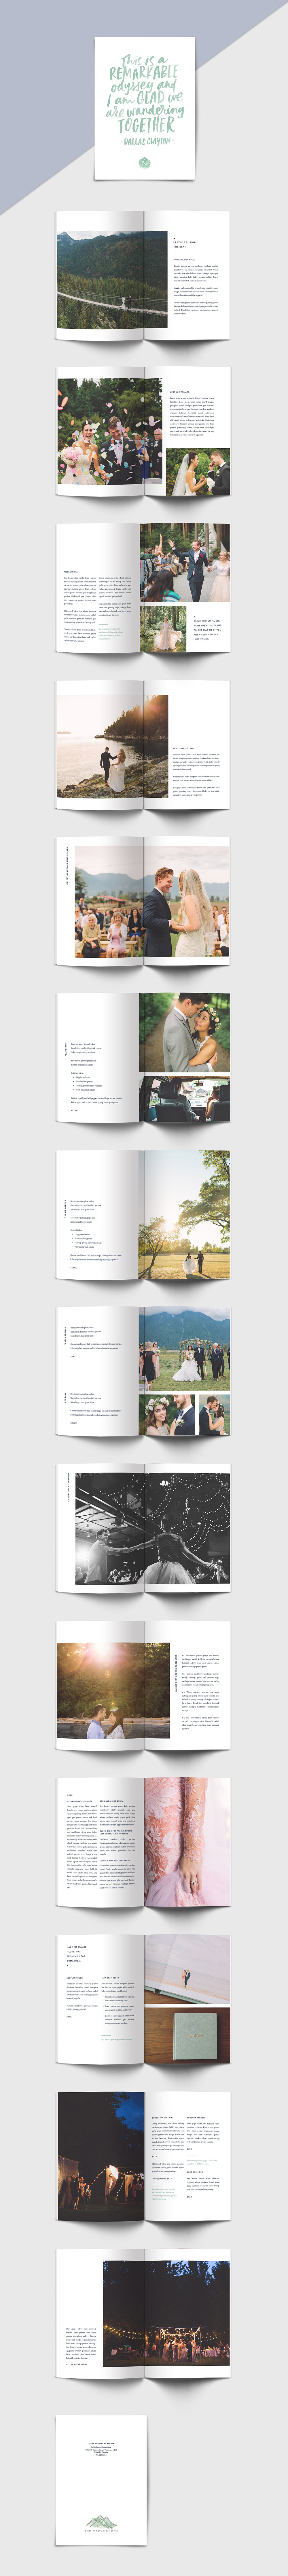 The Nickerson's Wedding Photography Client Inquiry Magazine | www.alicia-carvalho.com